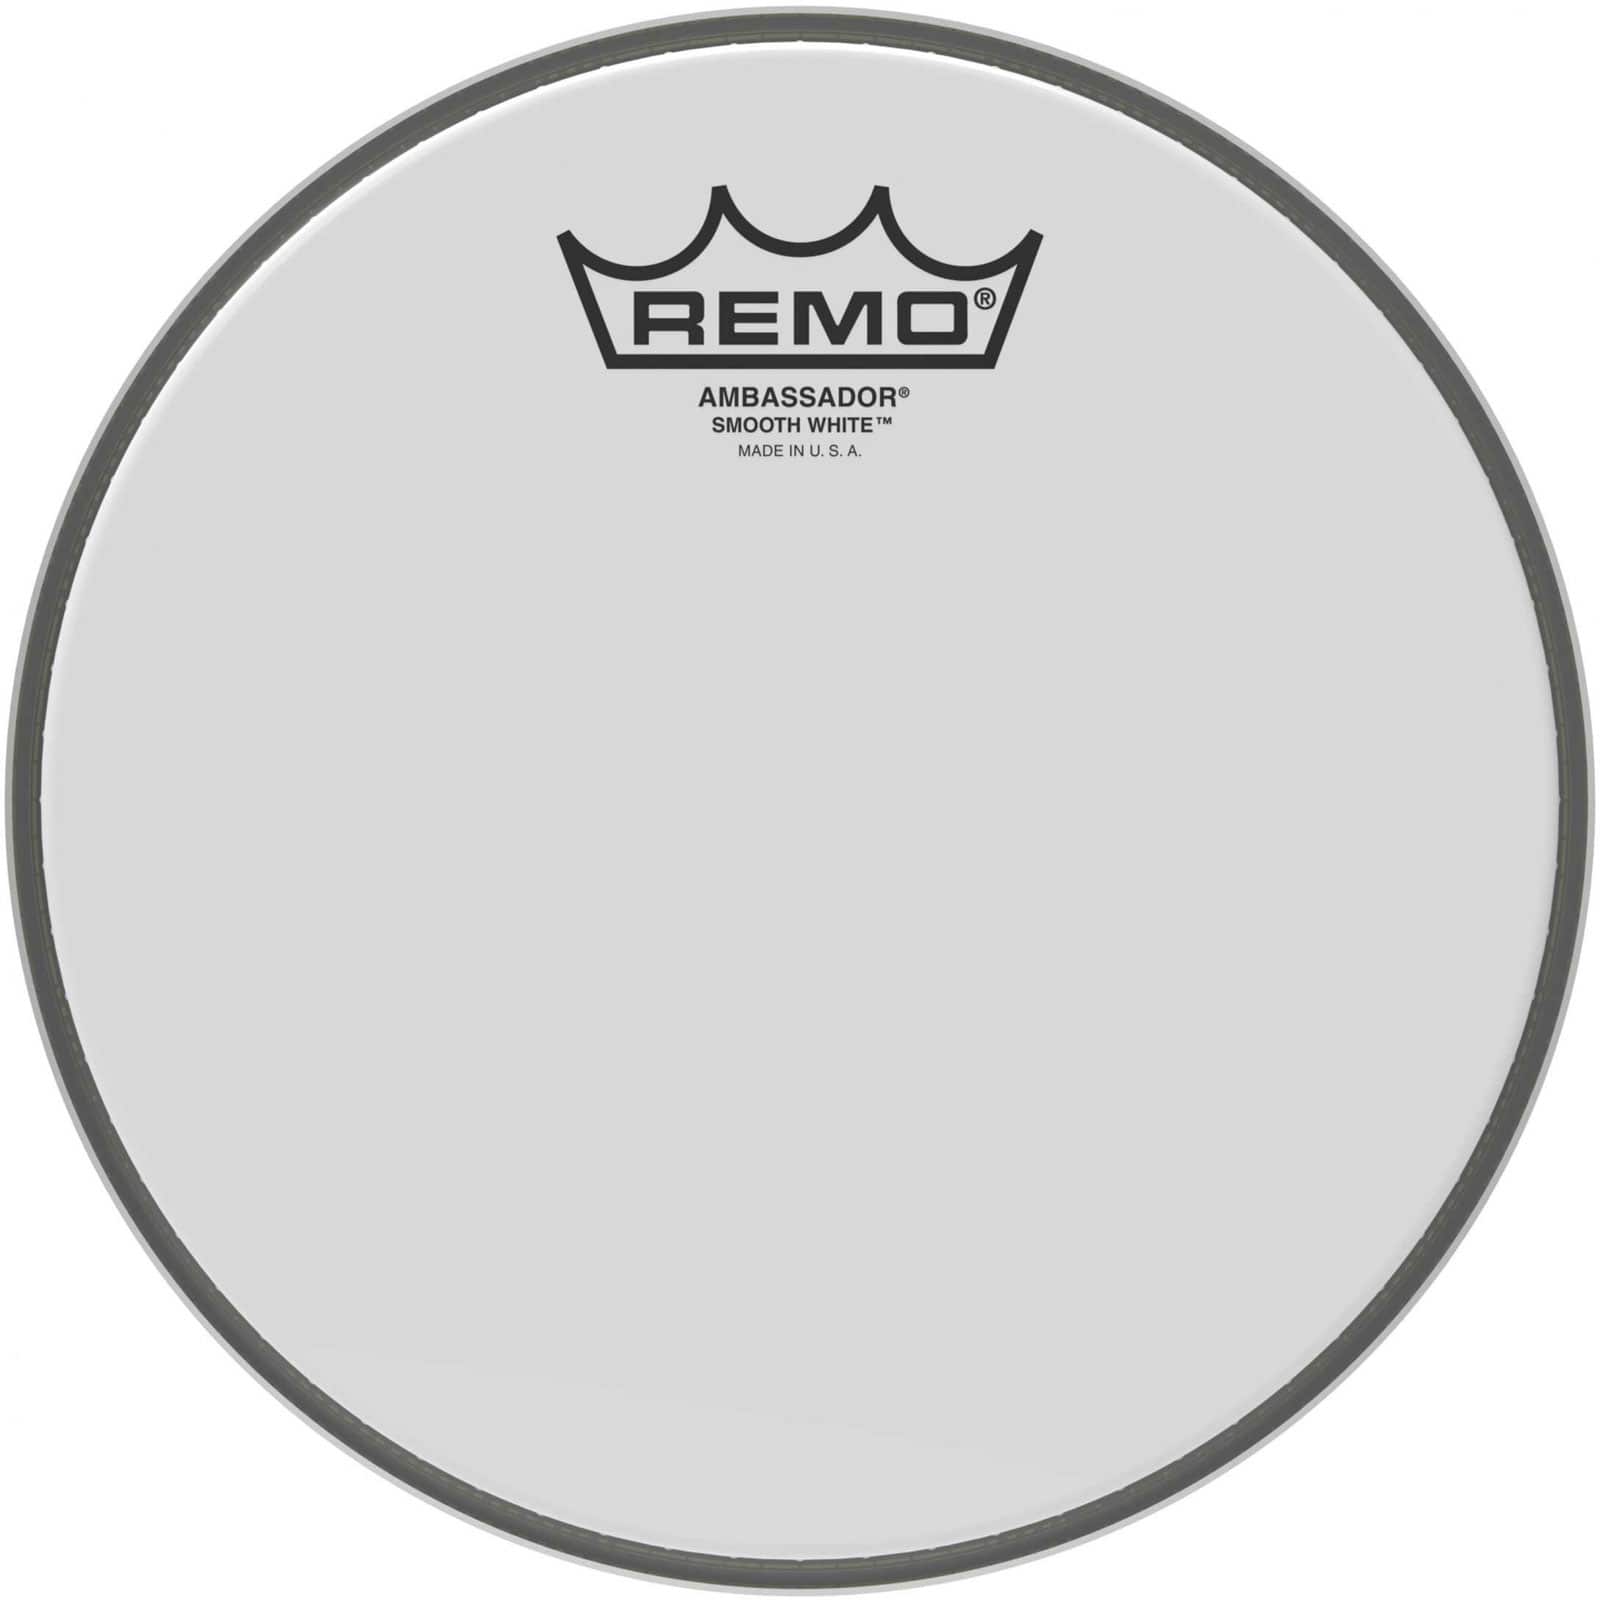 REMO BA-0208-00 AMBASSADOR SMOOTH WHITE 8